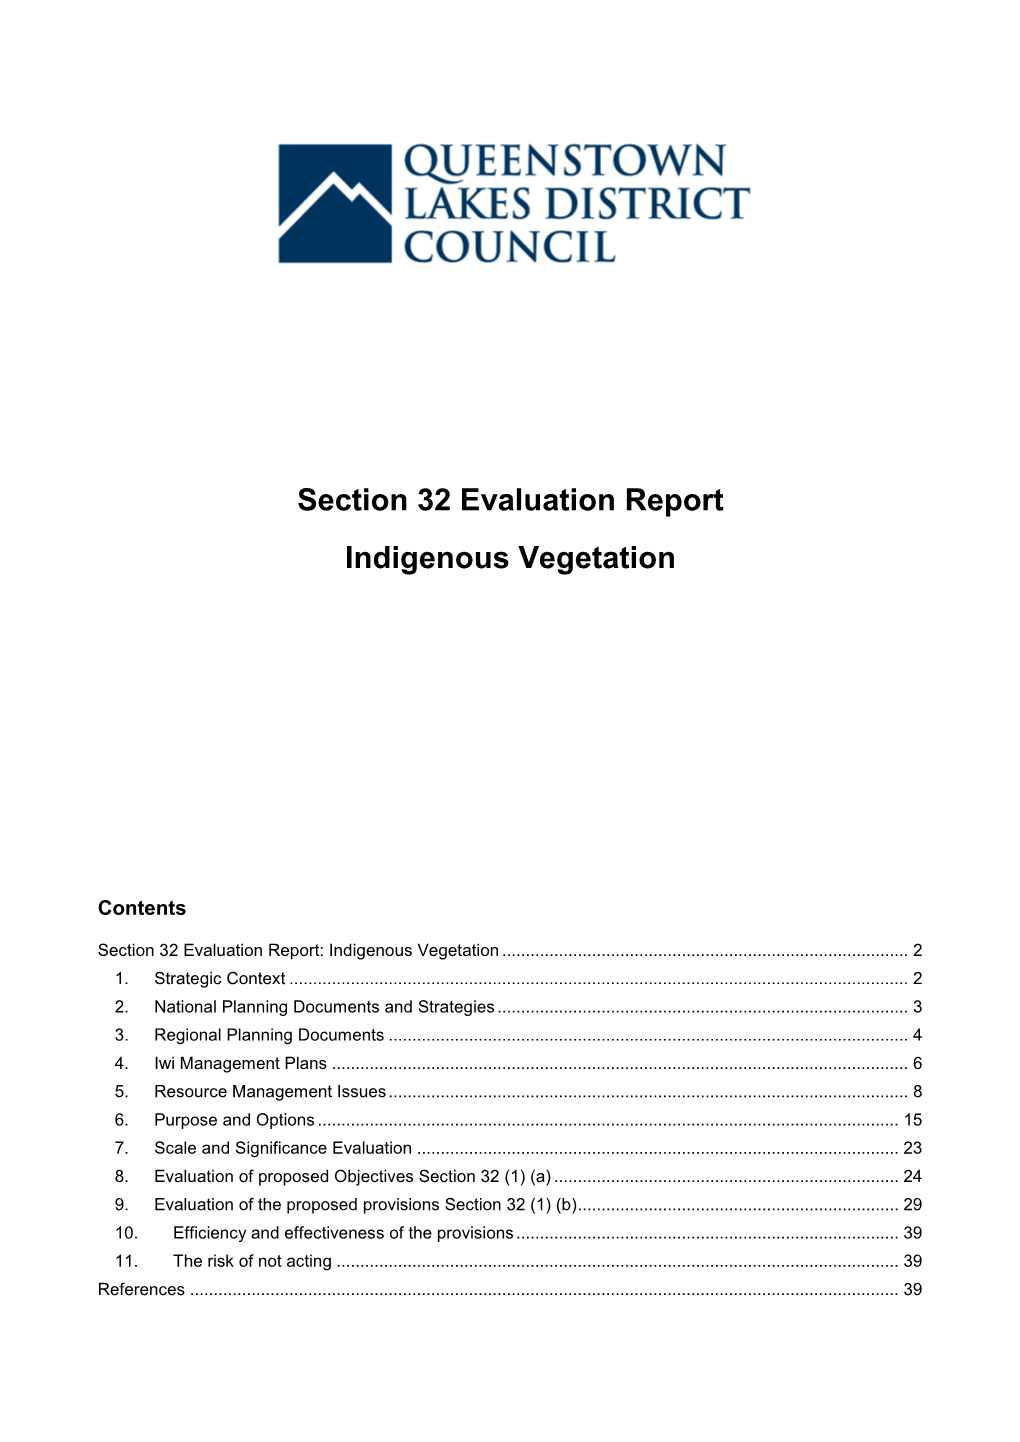 Section 32 Evaluation Report Indigenous Vegetation